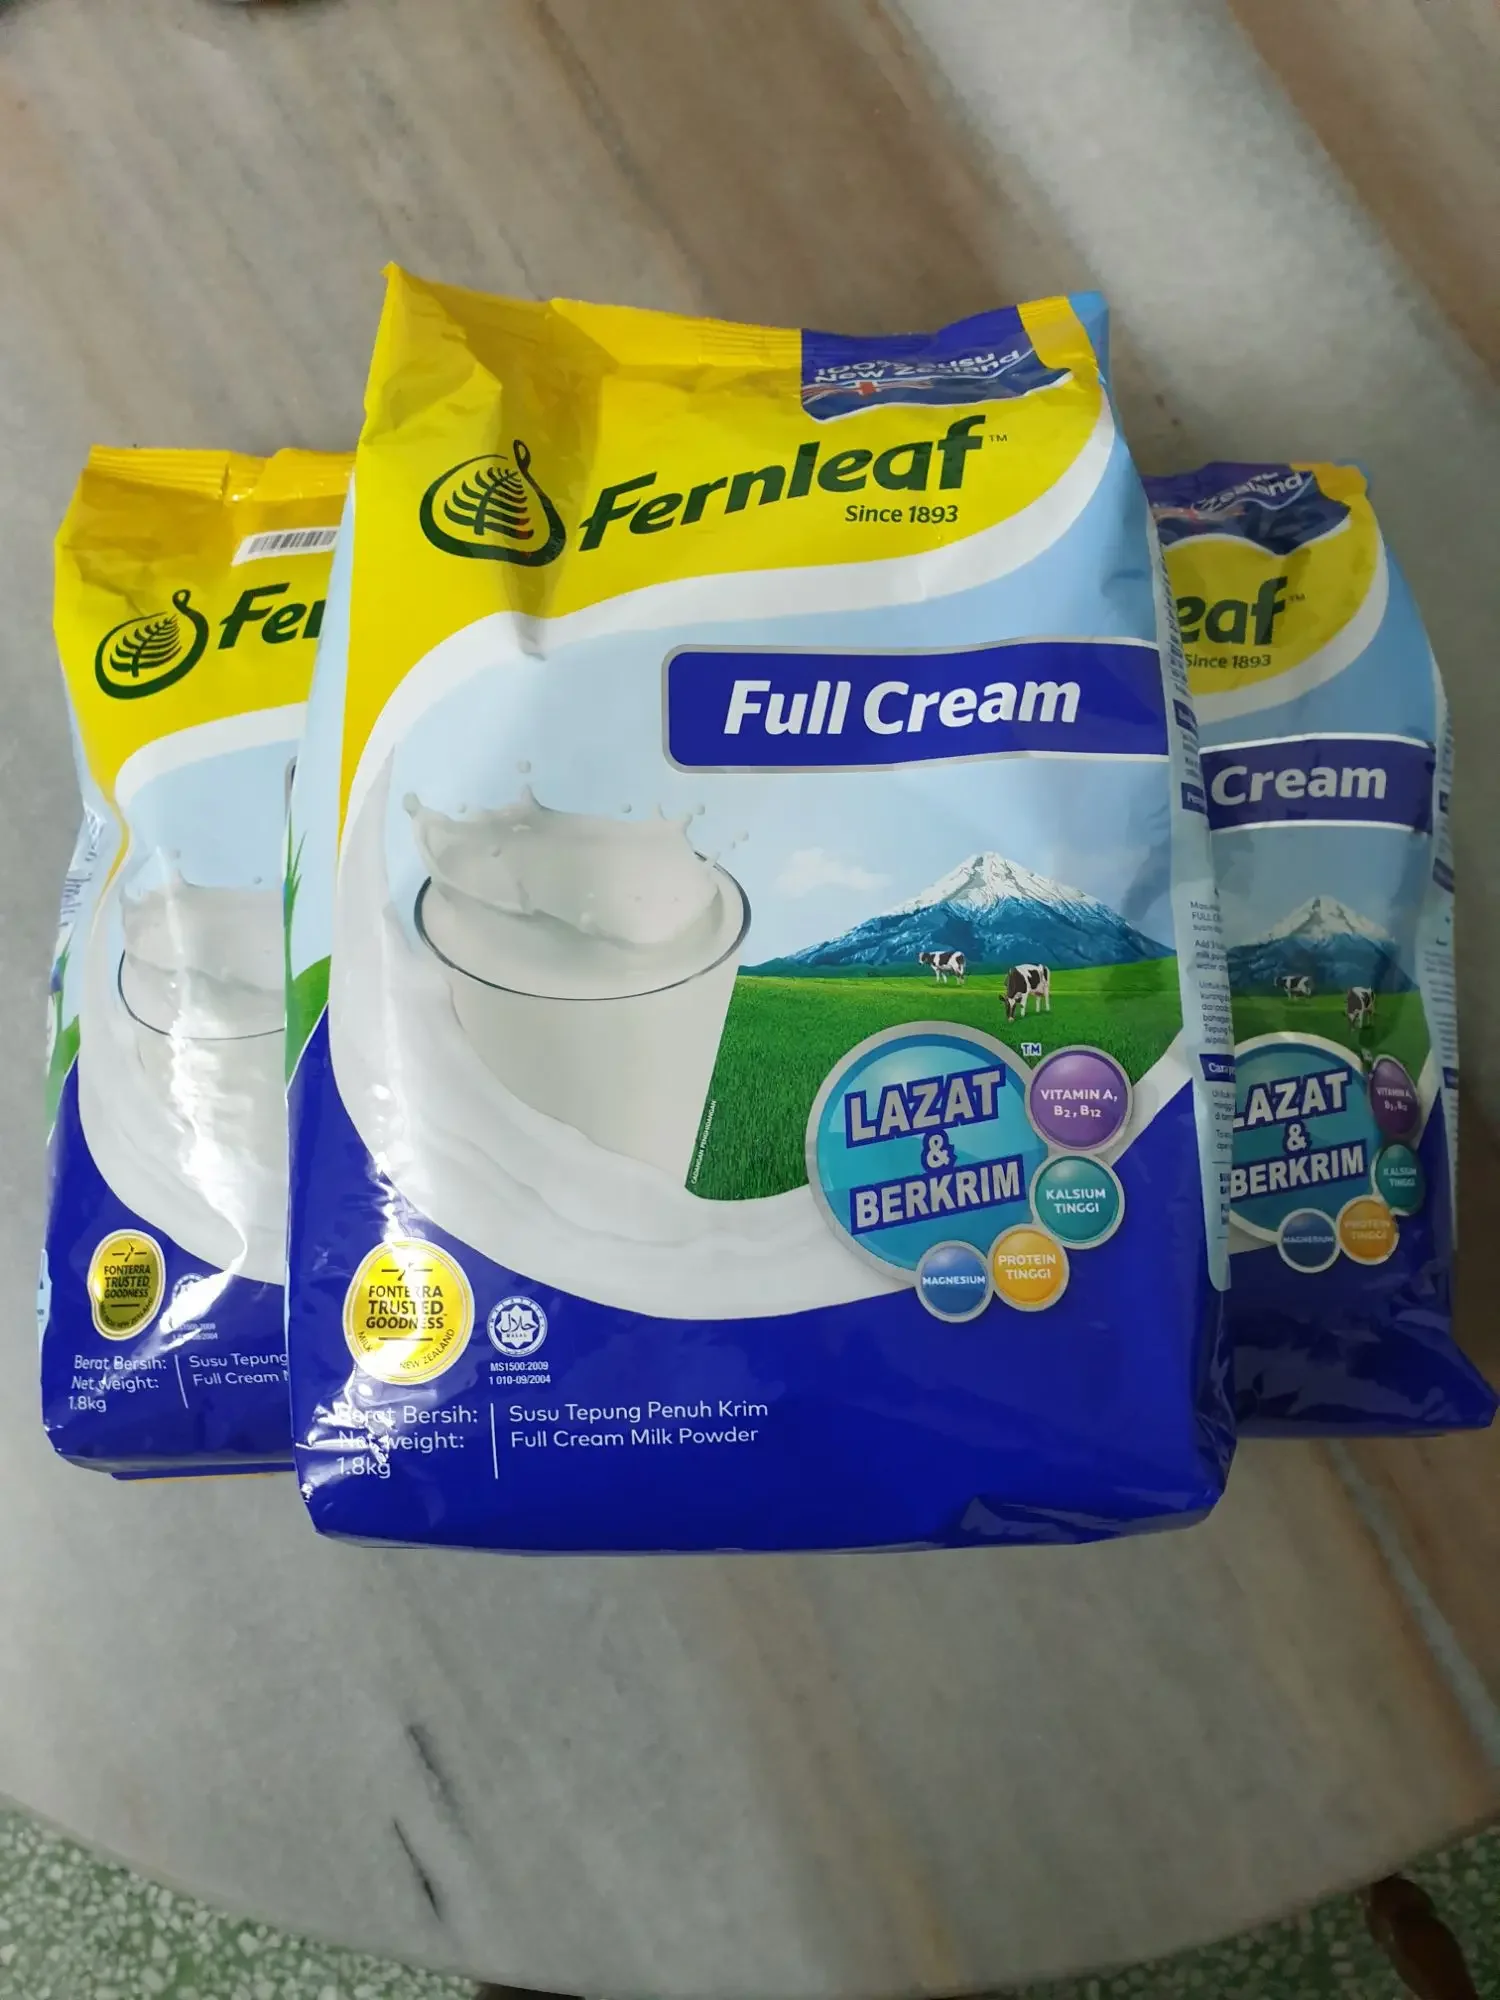 Fernleaf Full cream 1.8kg×3